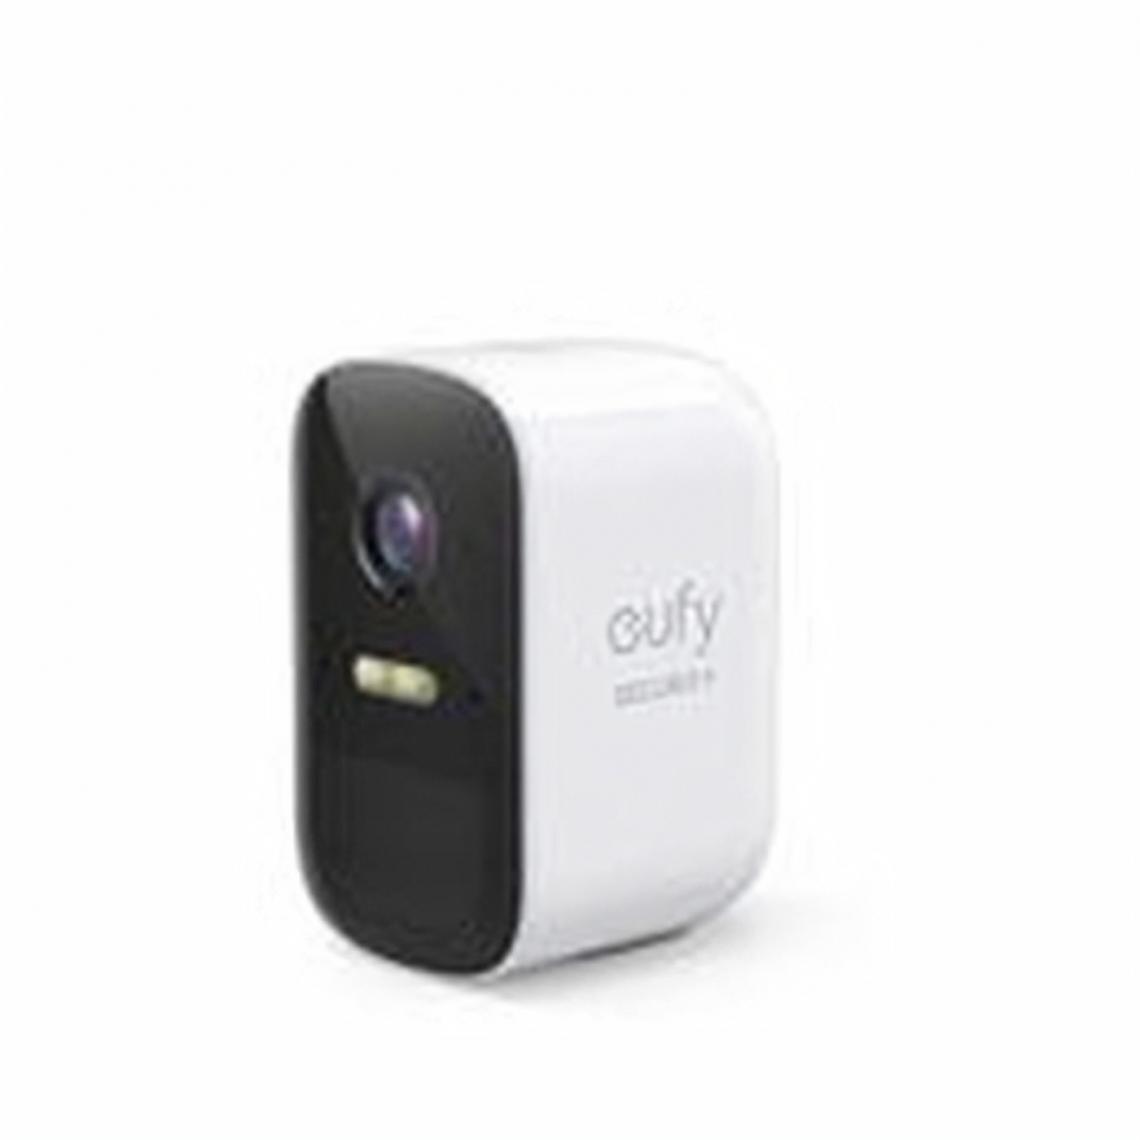 Eufy - EUFY Camera de surveillance seule - Caméra de surveillance connectée